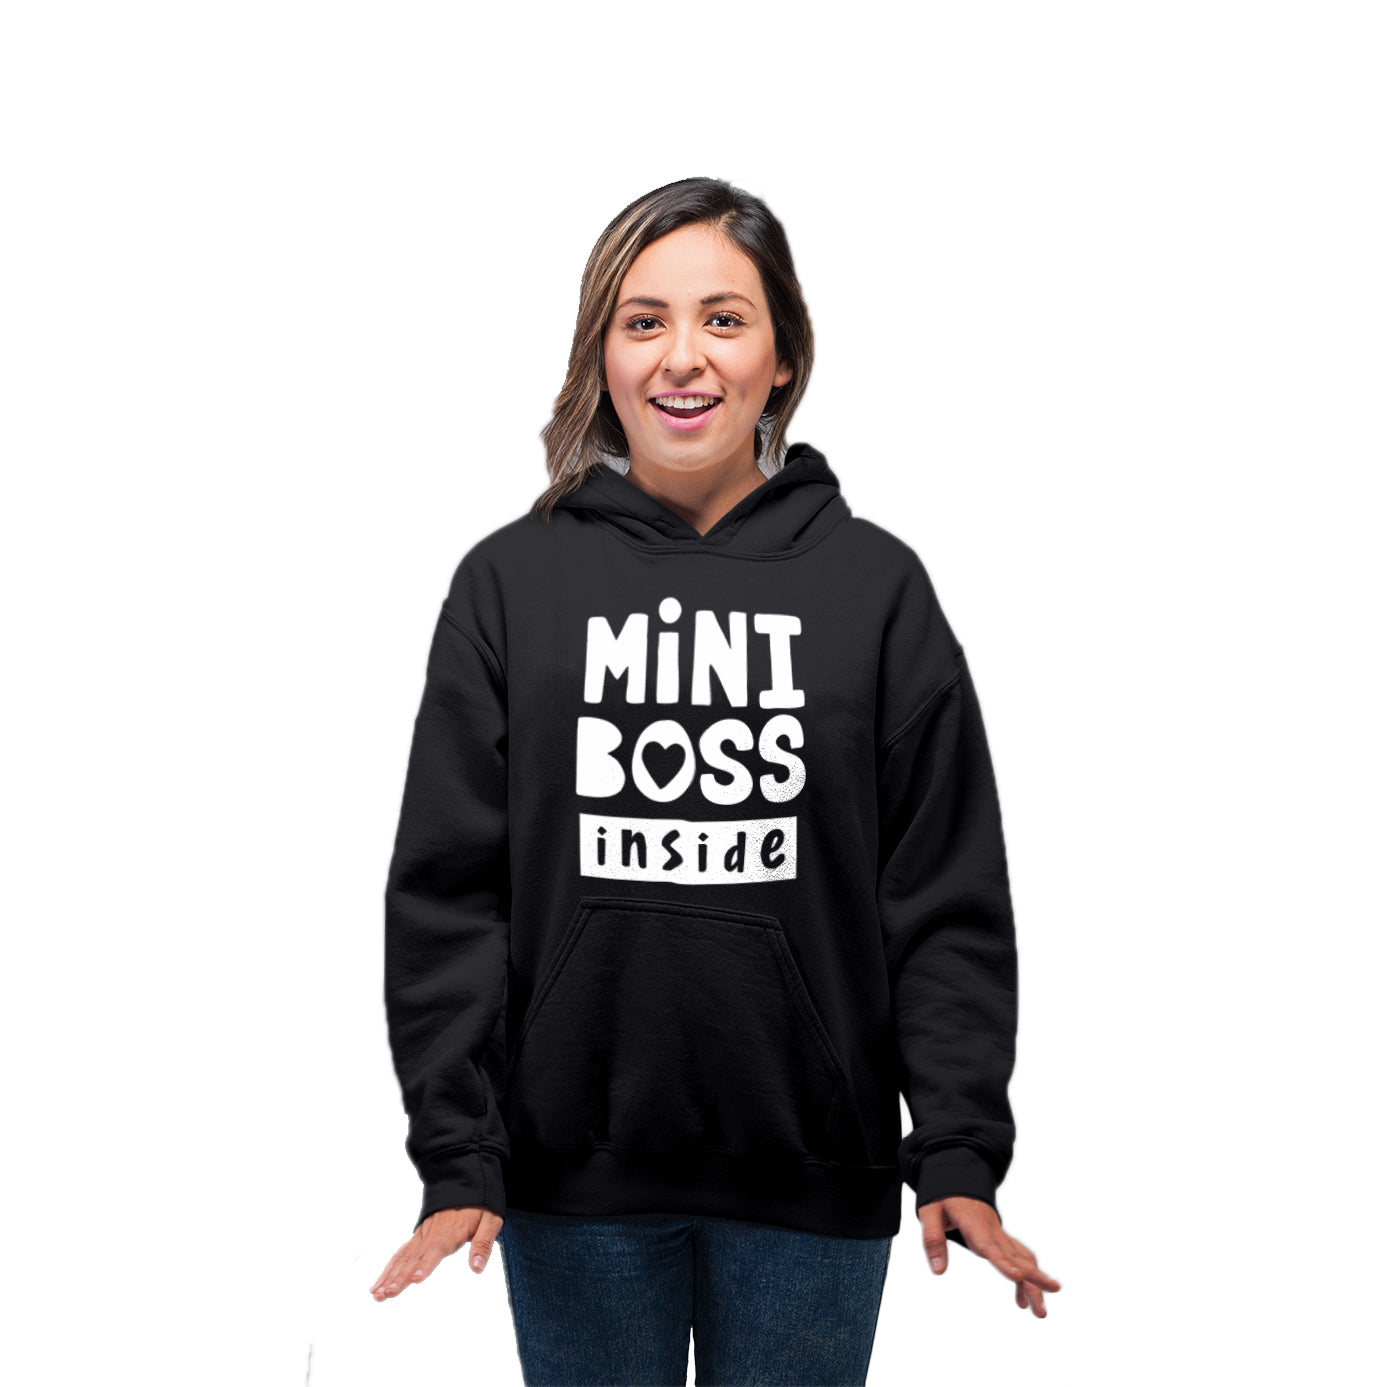 Mini boss inside Maternity Sweatshirts |Maternity Hoodies for women- Black